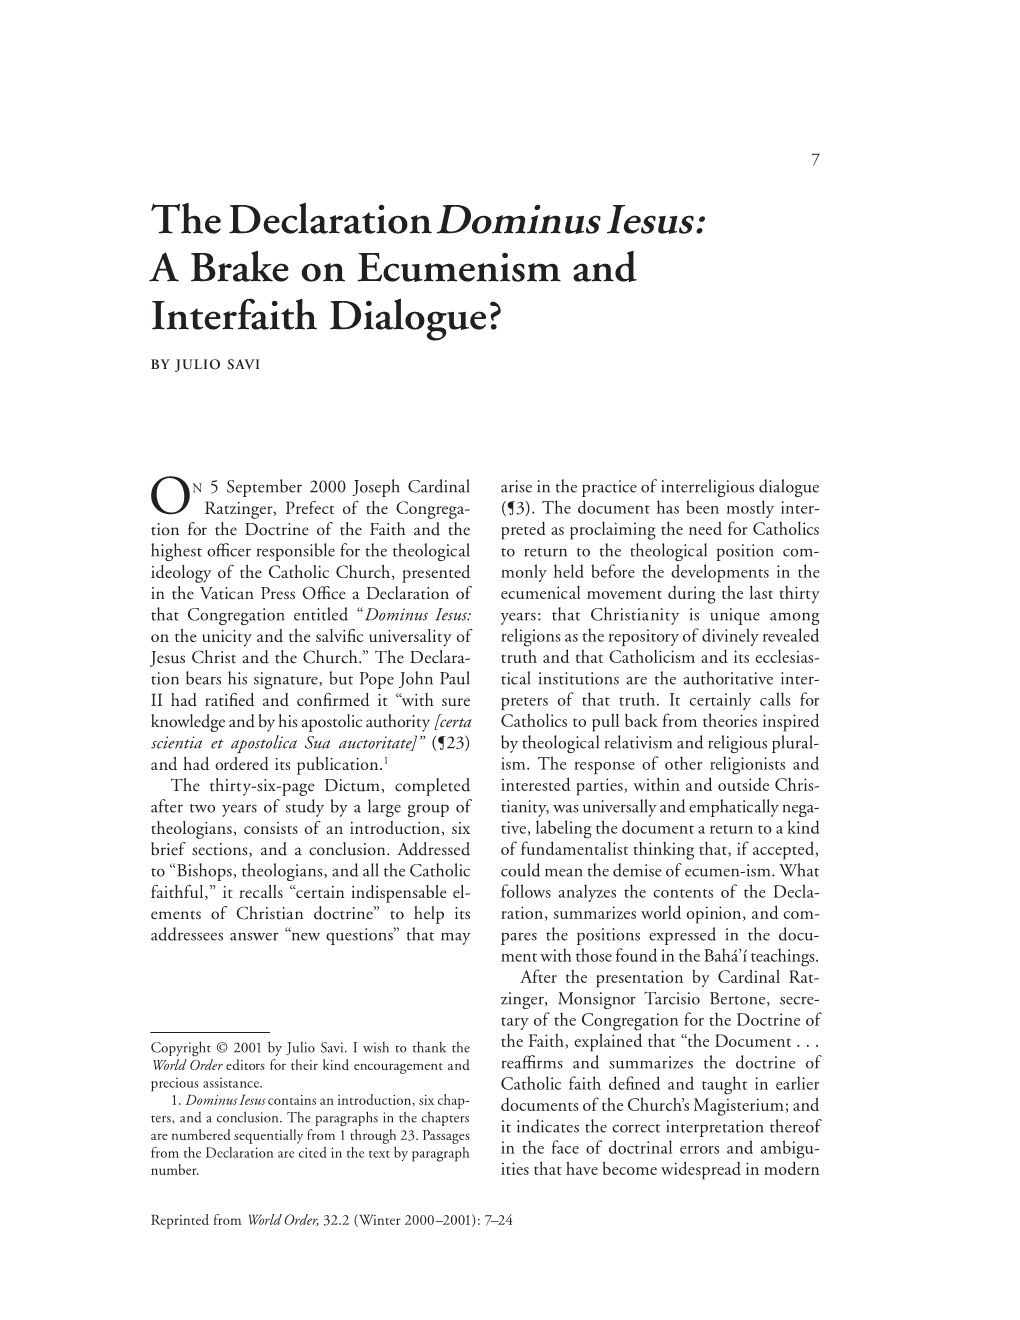 The Declaration Dominus Iesus: a Brake on Ecumenism and Interfaith Dialogue?